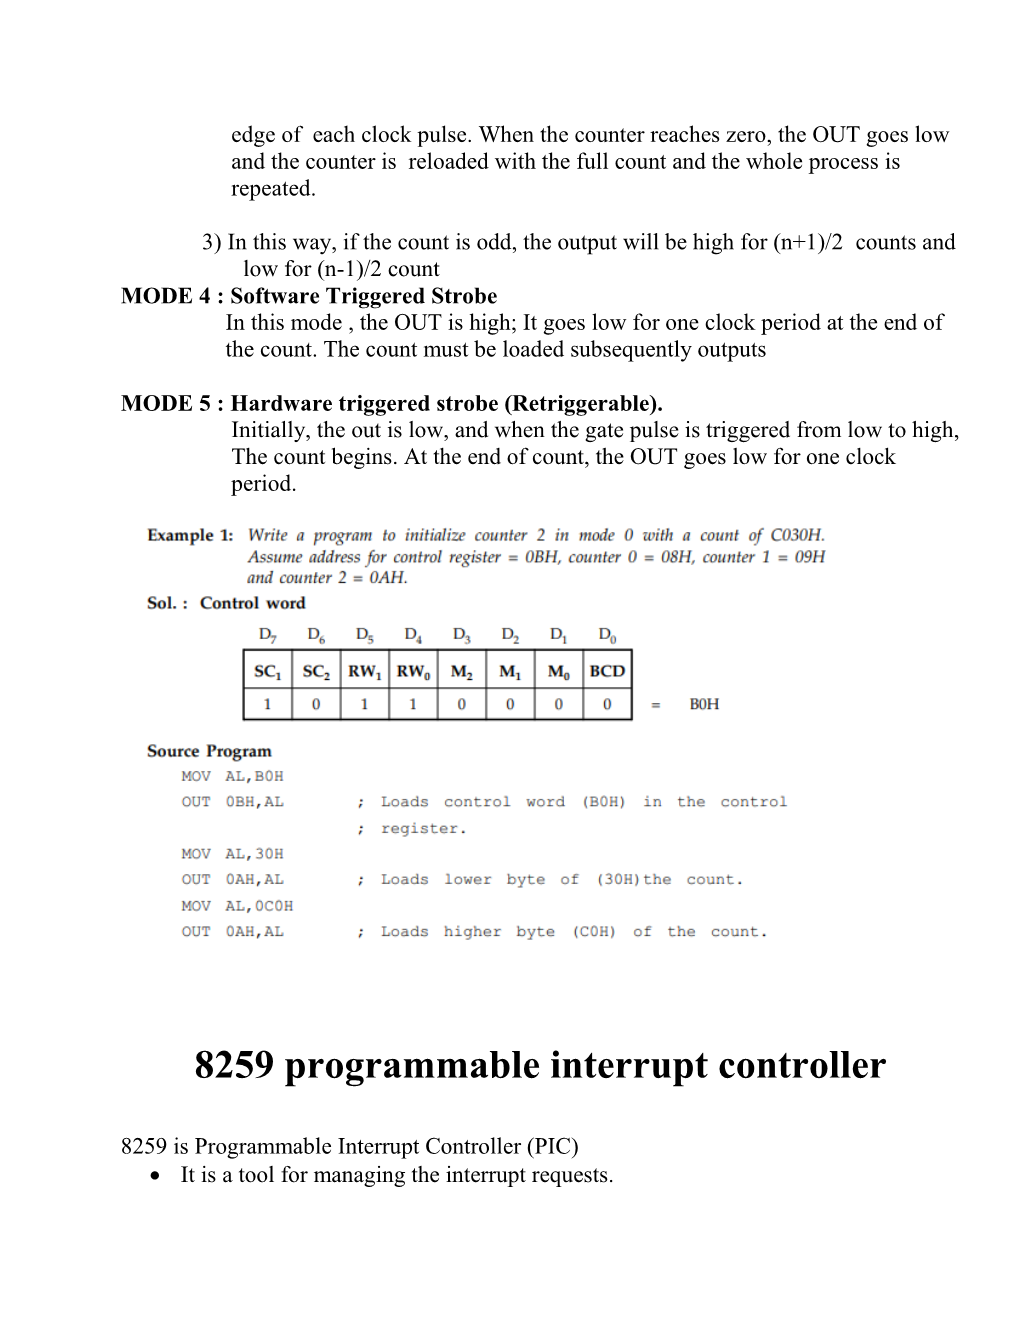 8259 Programmable Interrupt Controller